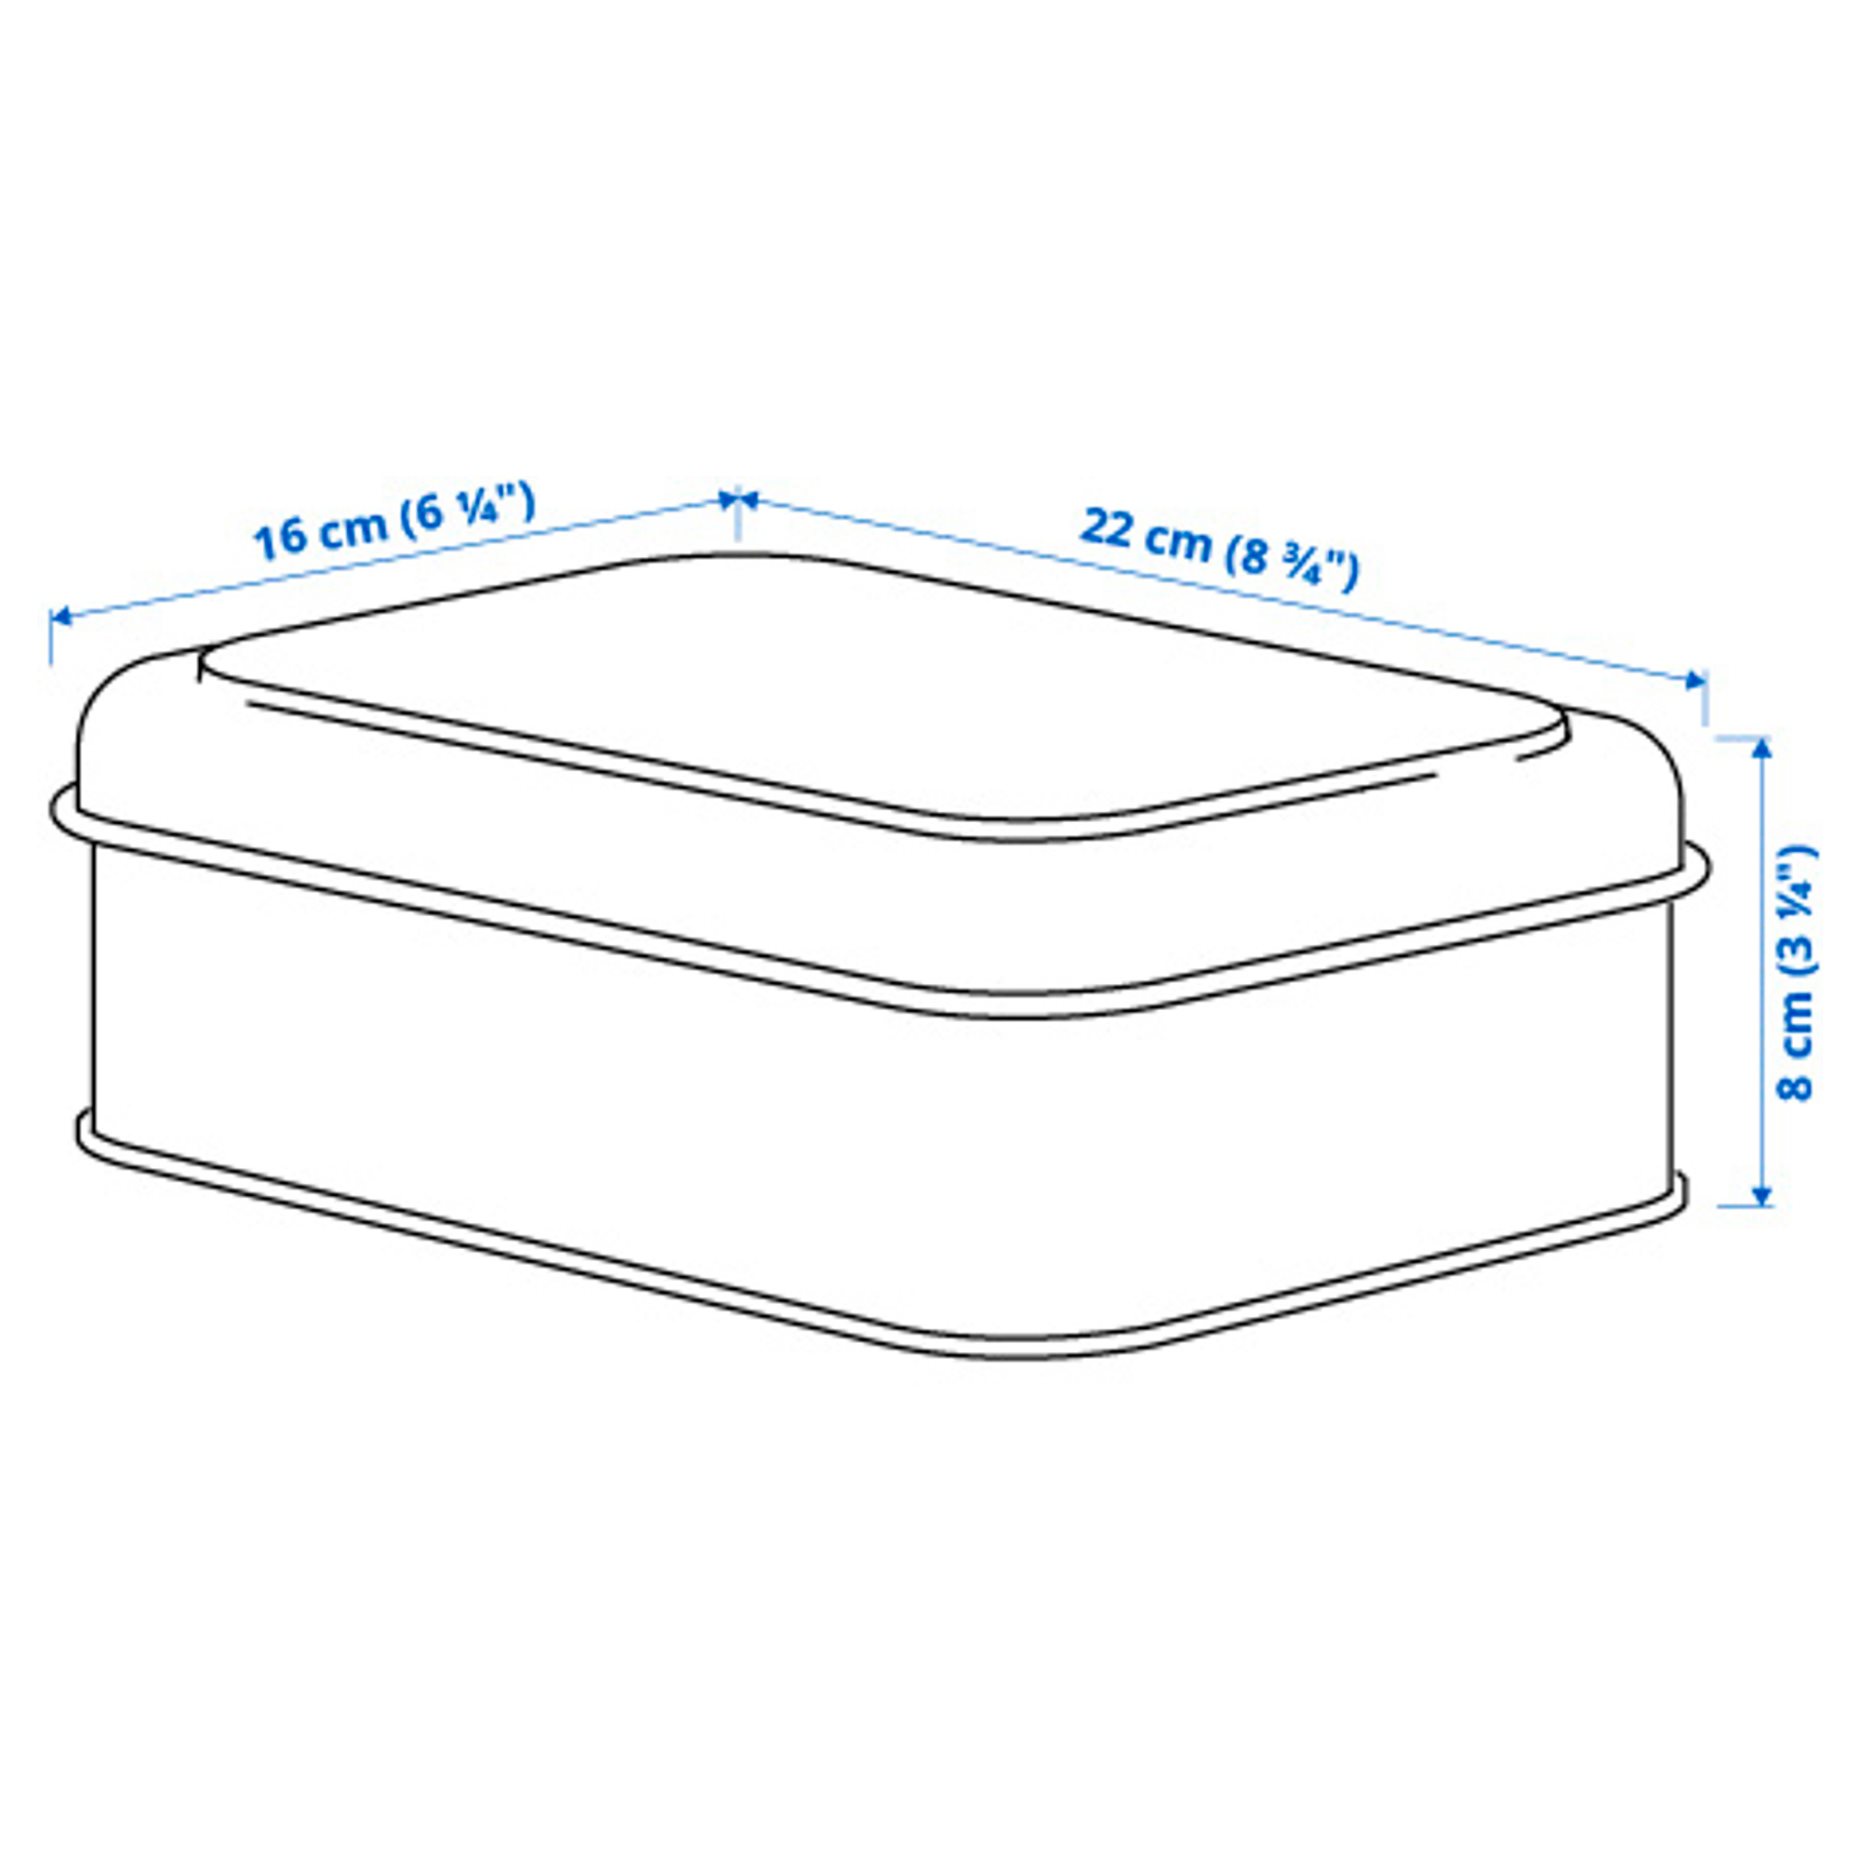 PLOGFÅRA, κουτί αποθήκευσης με καπάκι, 22x16x8 cm, 905.432.10